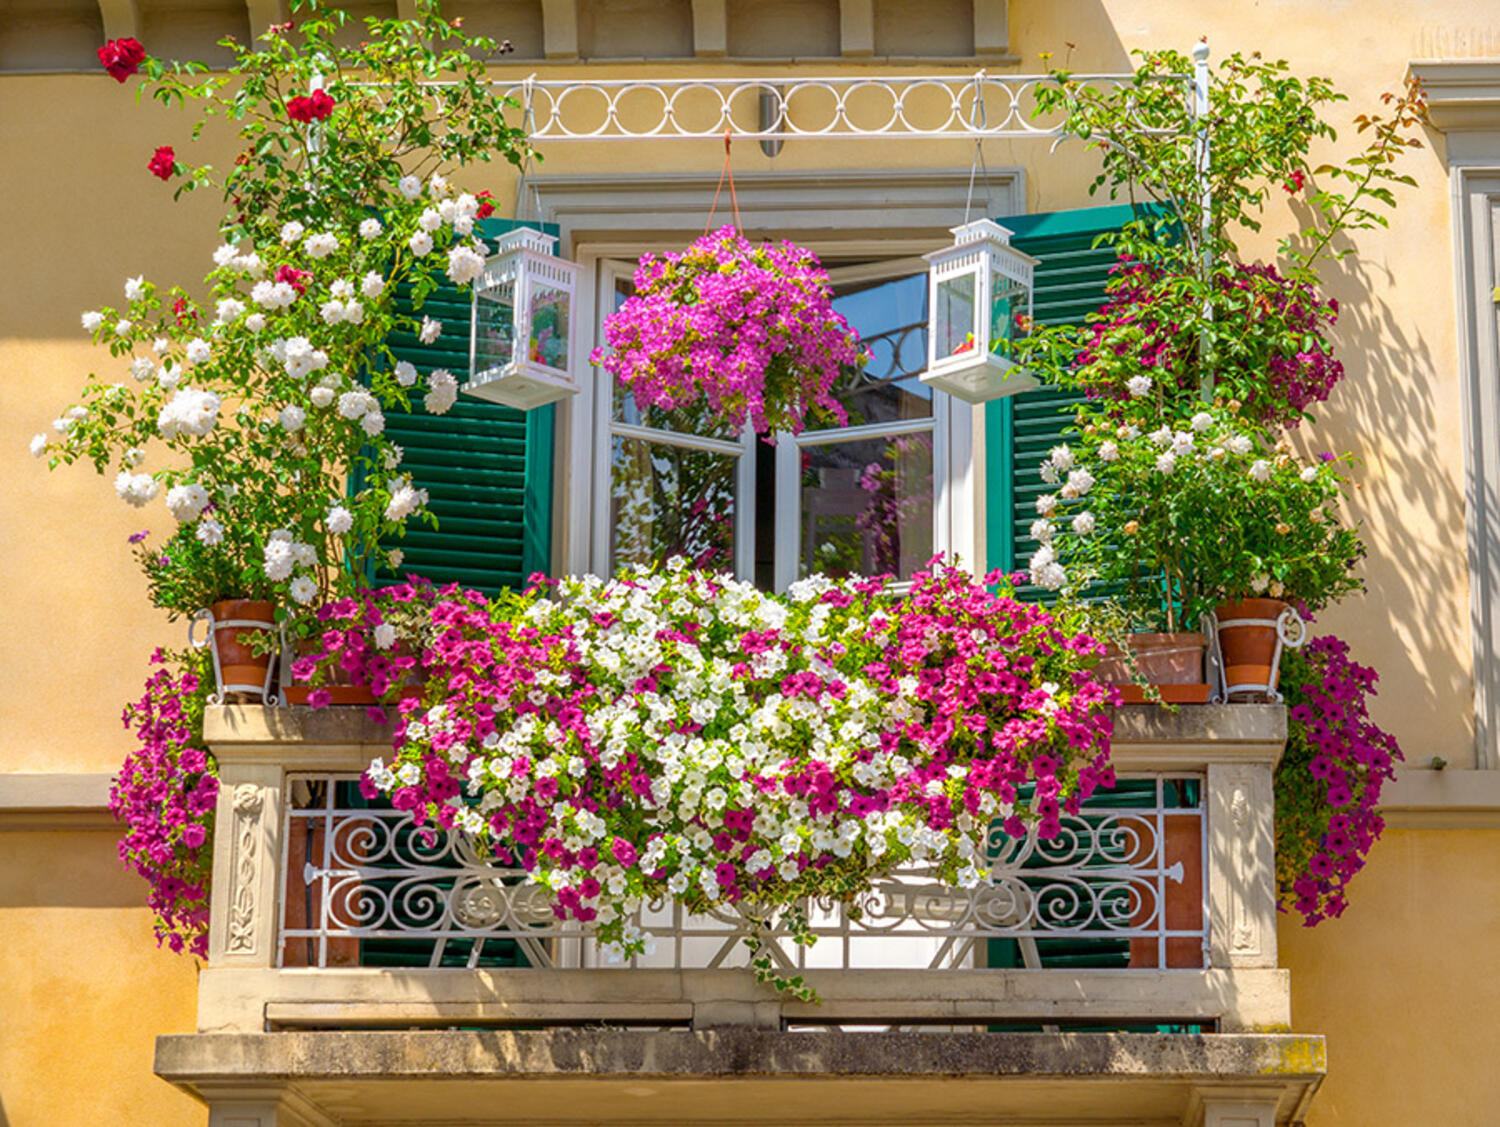  Balcon plin de ghivece cu flori colorate 